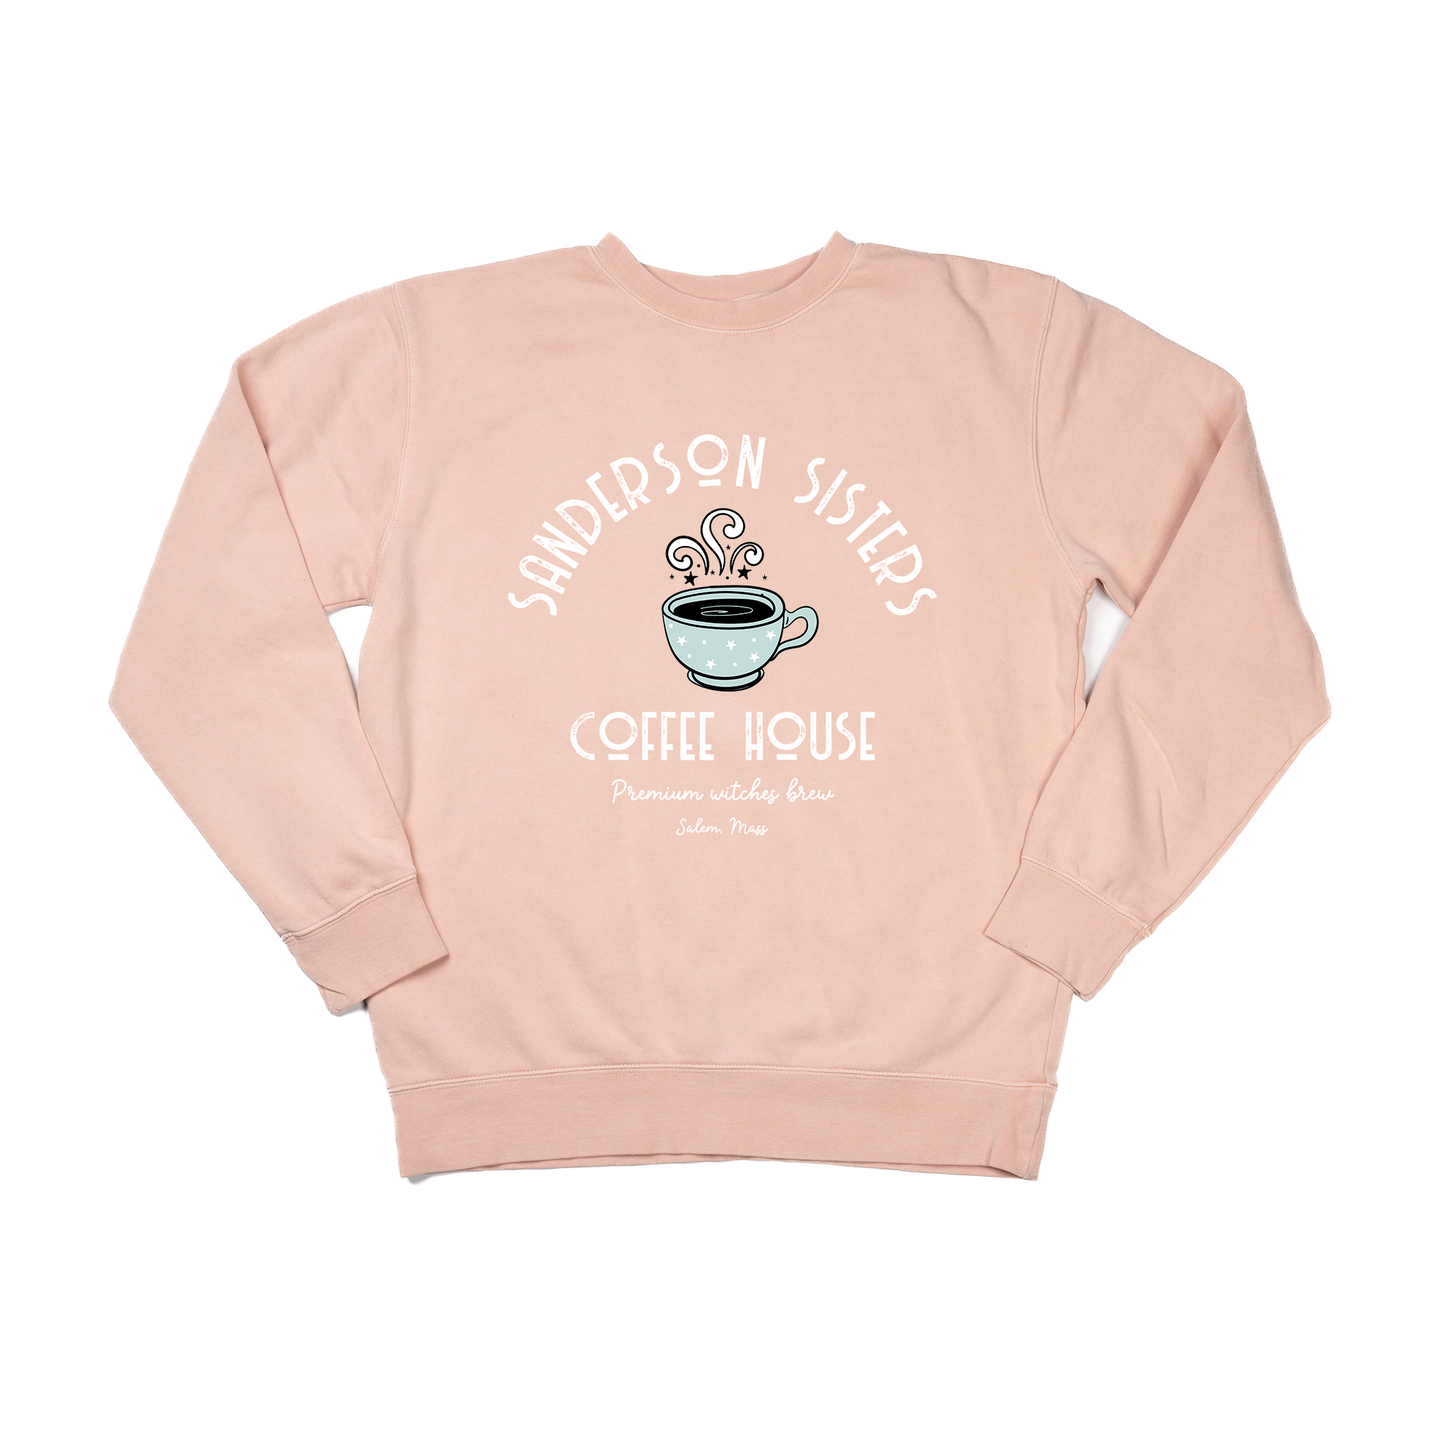 Sanderson Sisters Coffee House - Sweatshirt (Dusty Peach)